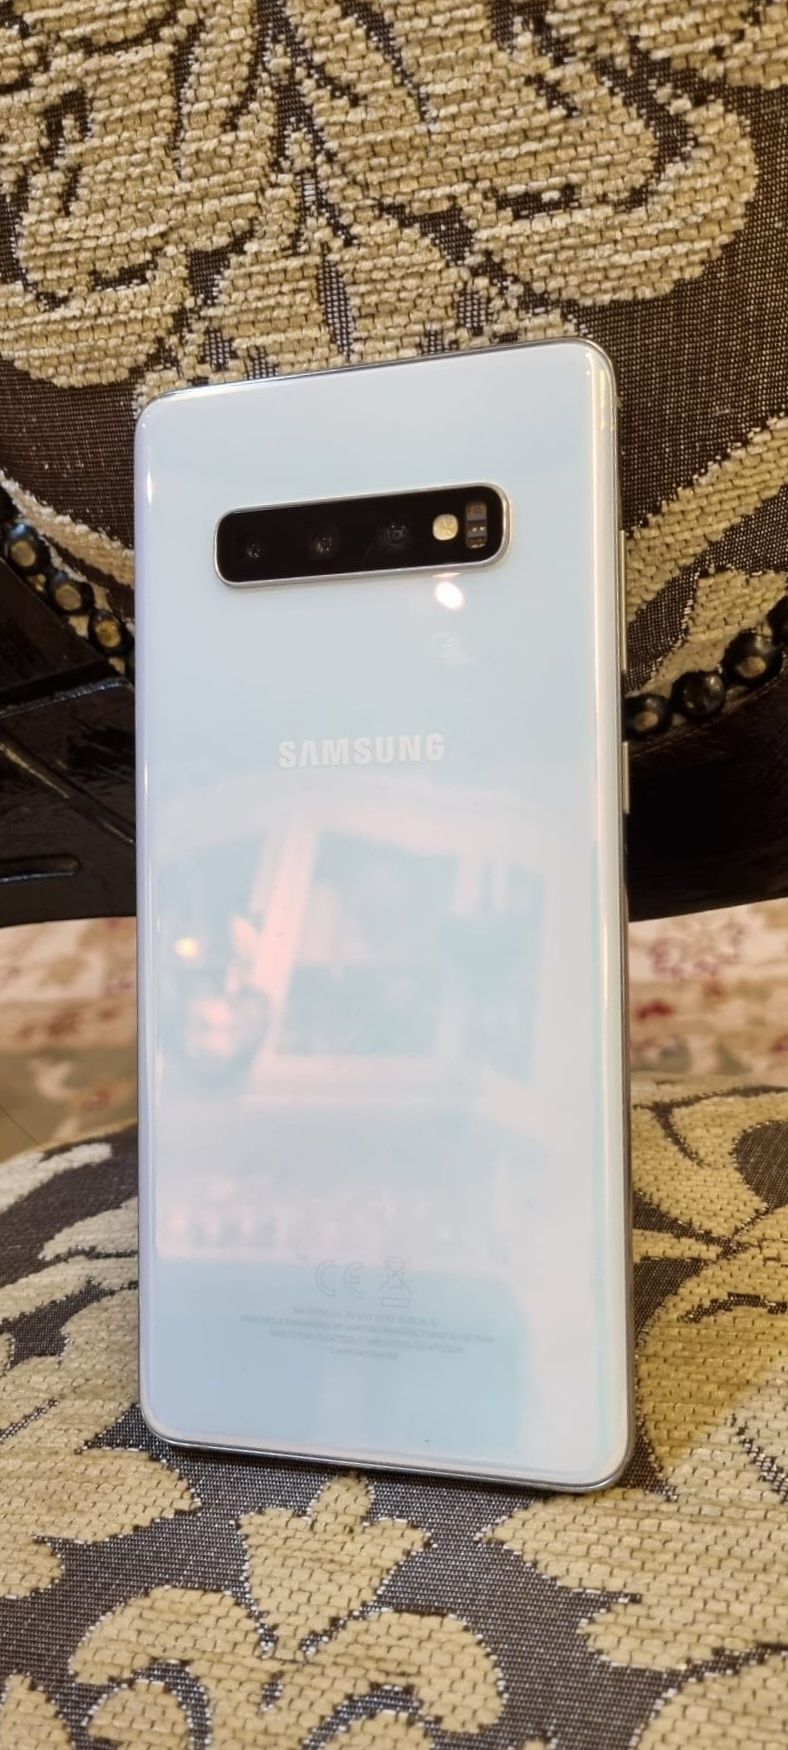 Samsung Galaxy S10+, Prism White, 128GB